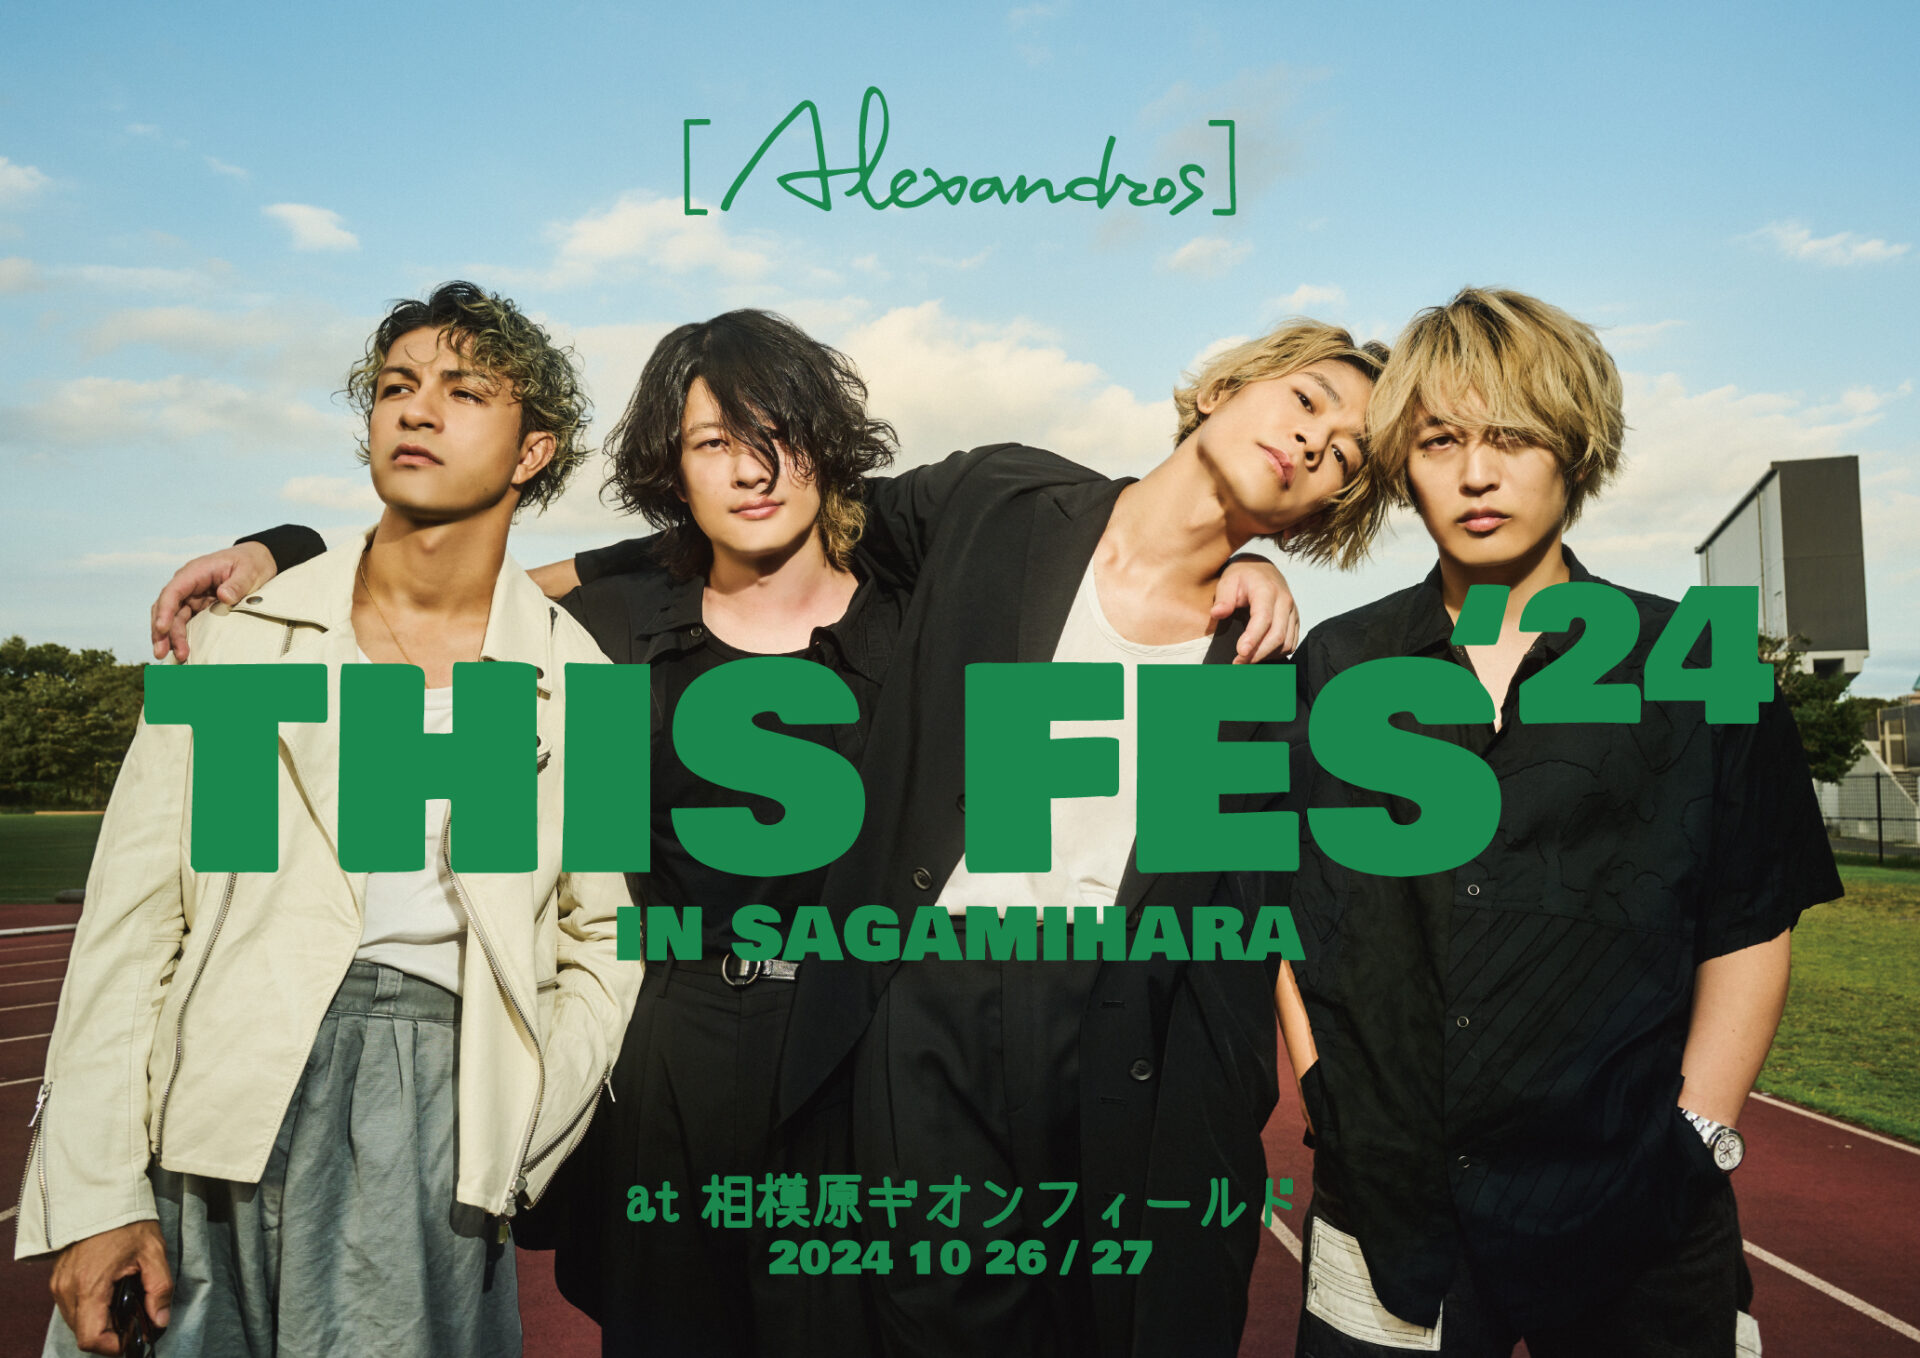 [Alexandros] presents THIS FES ’24 in Sagamihara 